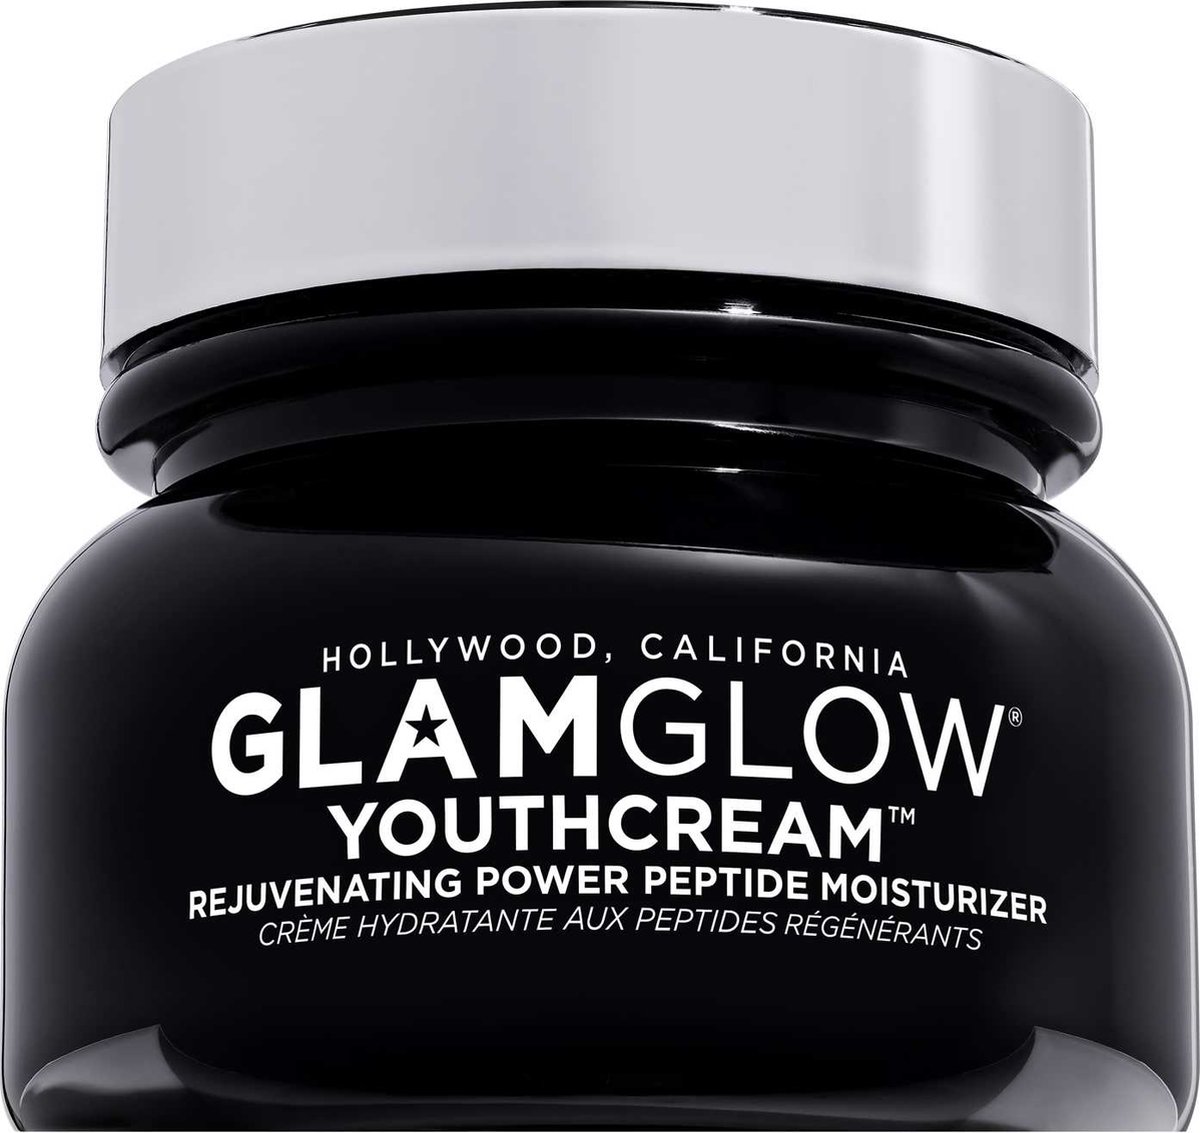 GLAMGLOW YOUTHCREAM Rejuvenating Power Peptide Moisturizer Cream 50ml